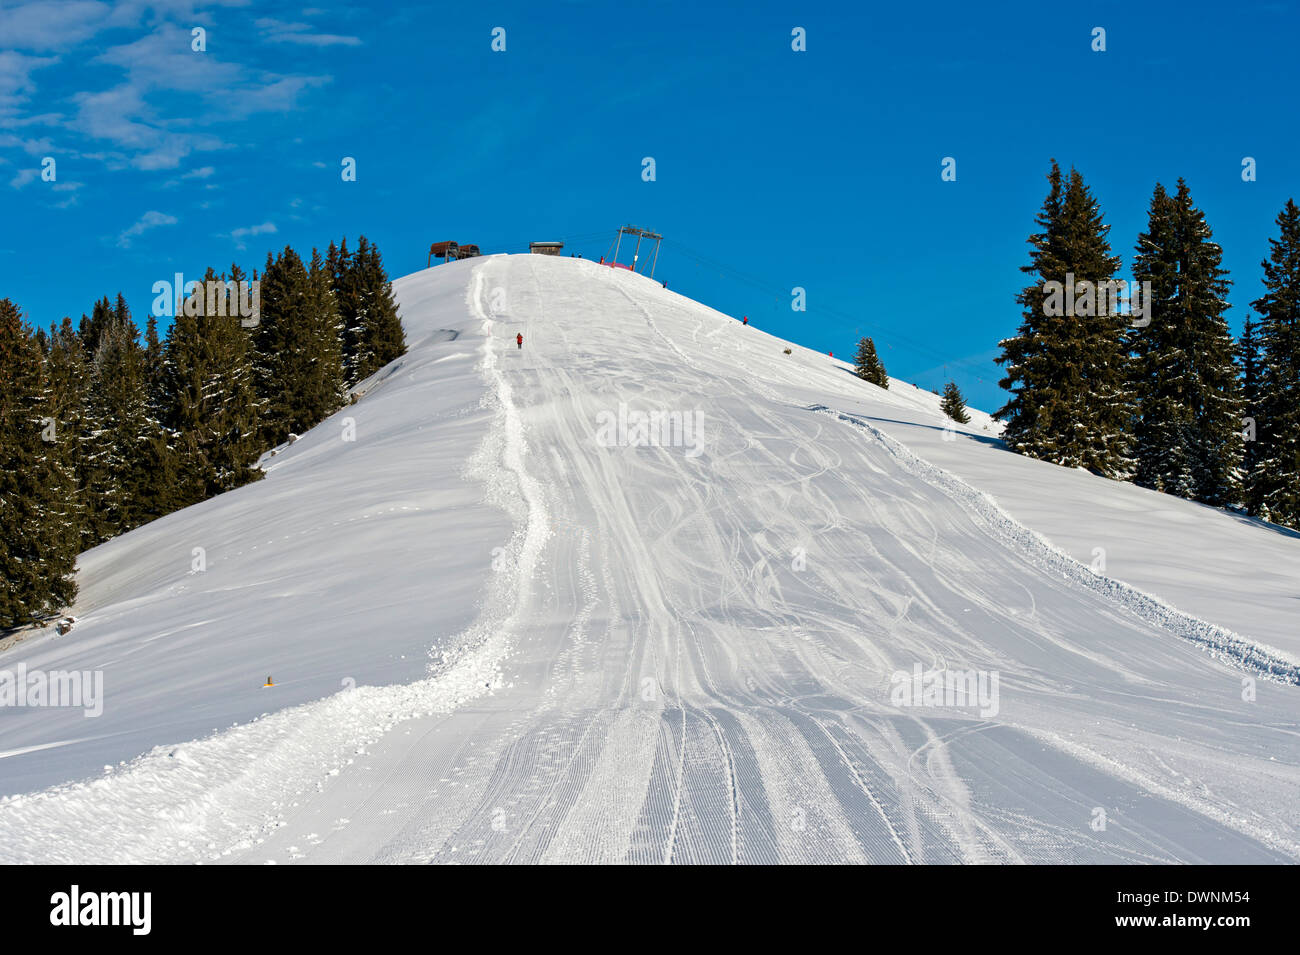 Empty ski slope under a blue sky, Rellerli Hugeli skiing region in the Saanenland area, Schönried, Canton of Bern, Switzerland Stock Photo